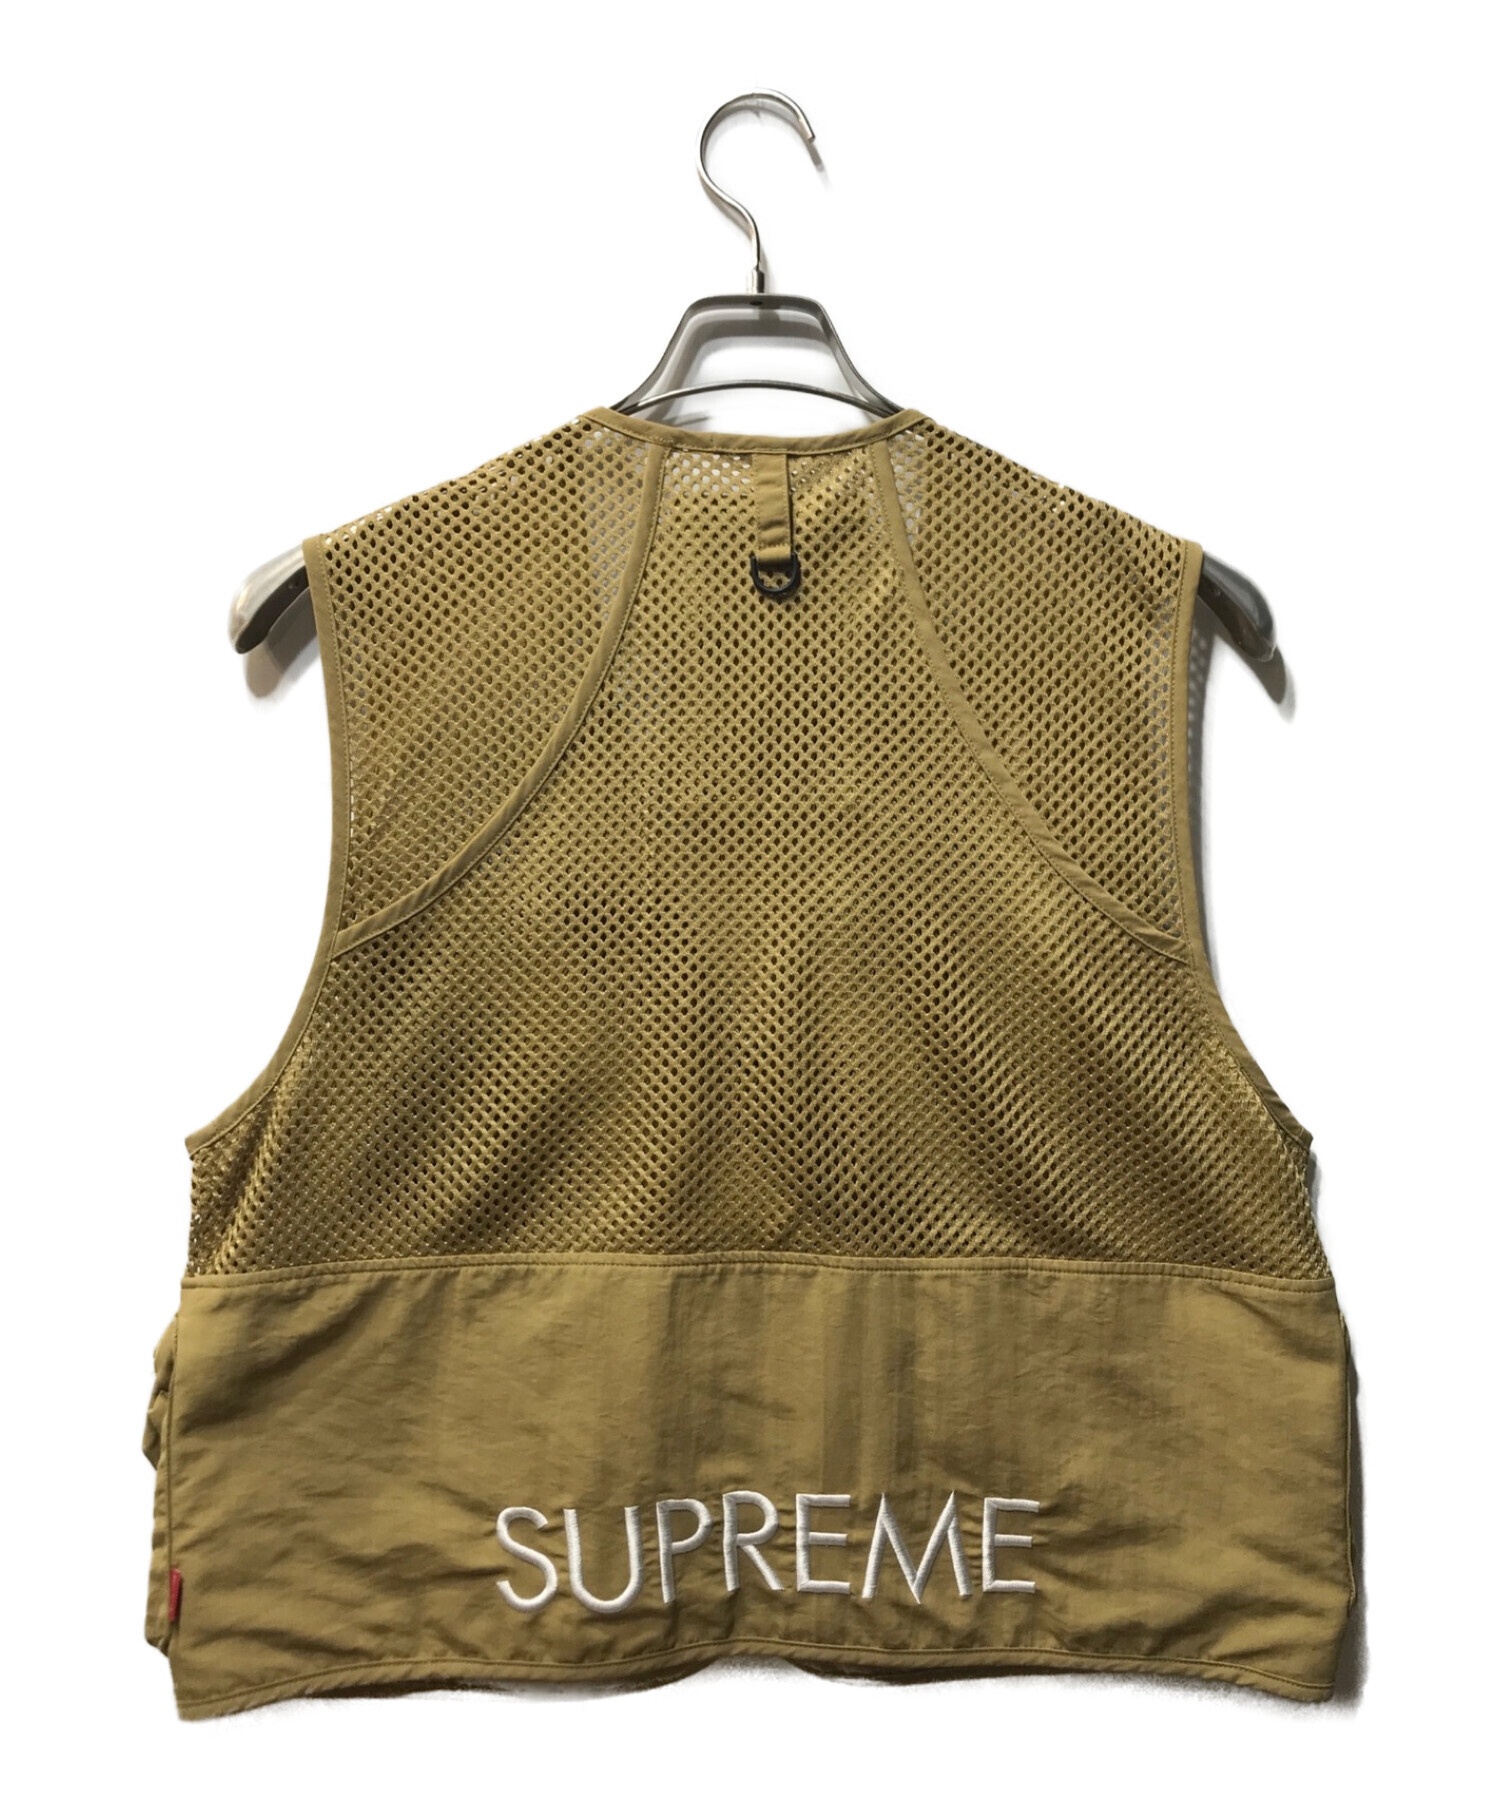 Supreme® The North Face® Cargo Vest サイズS